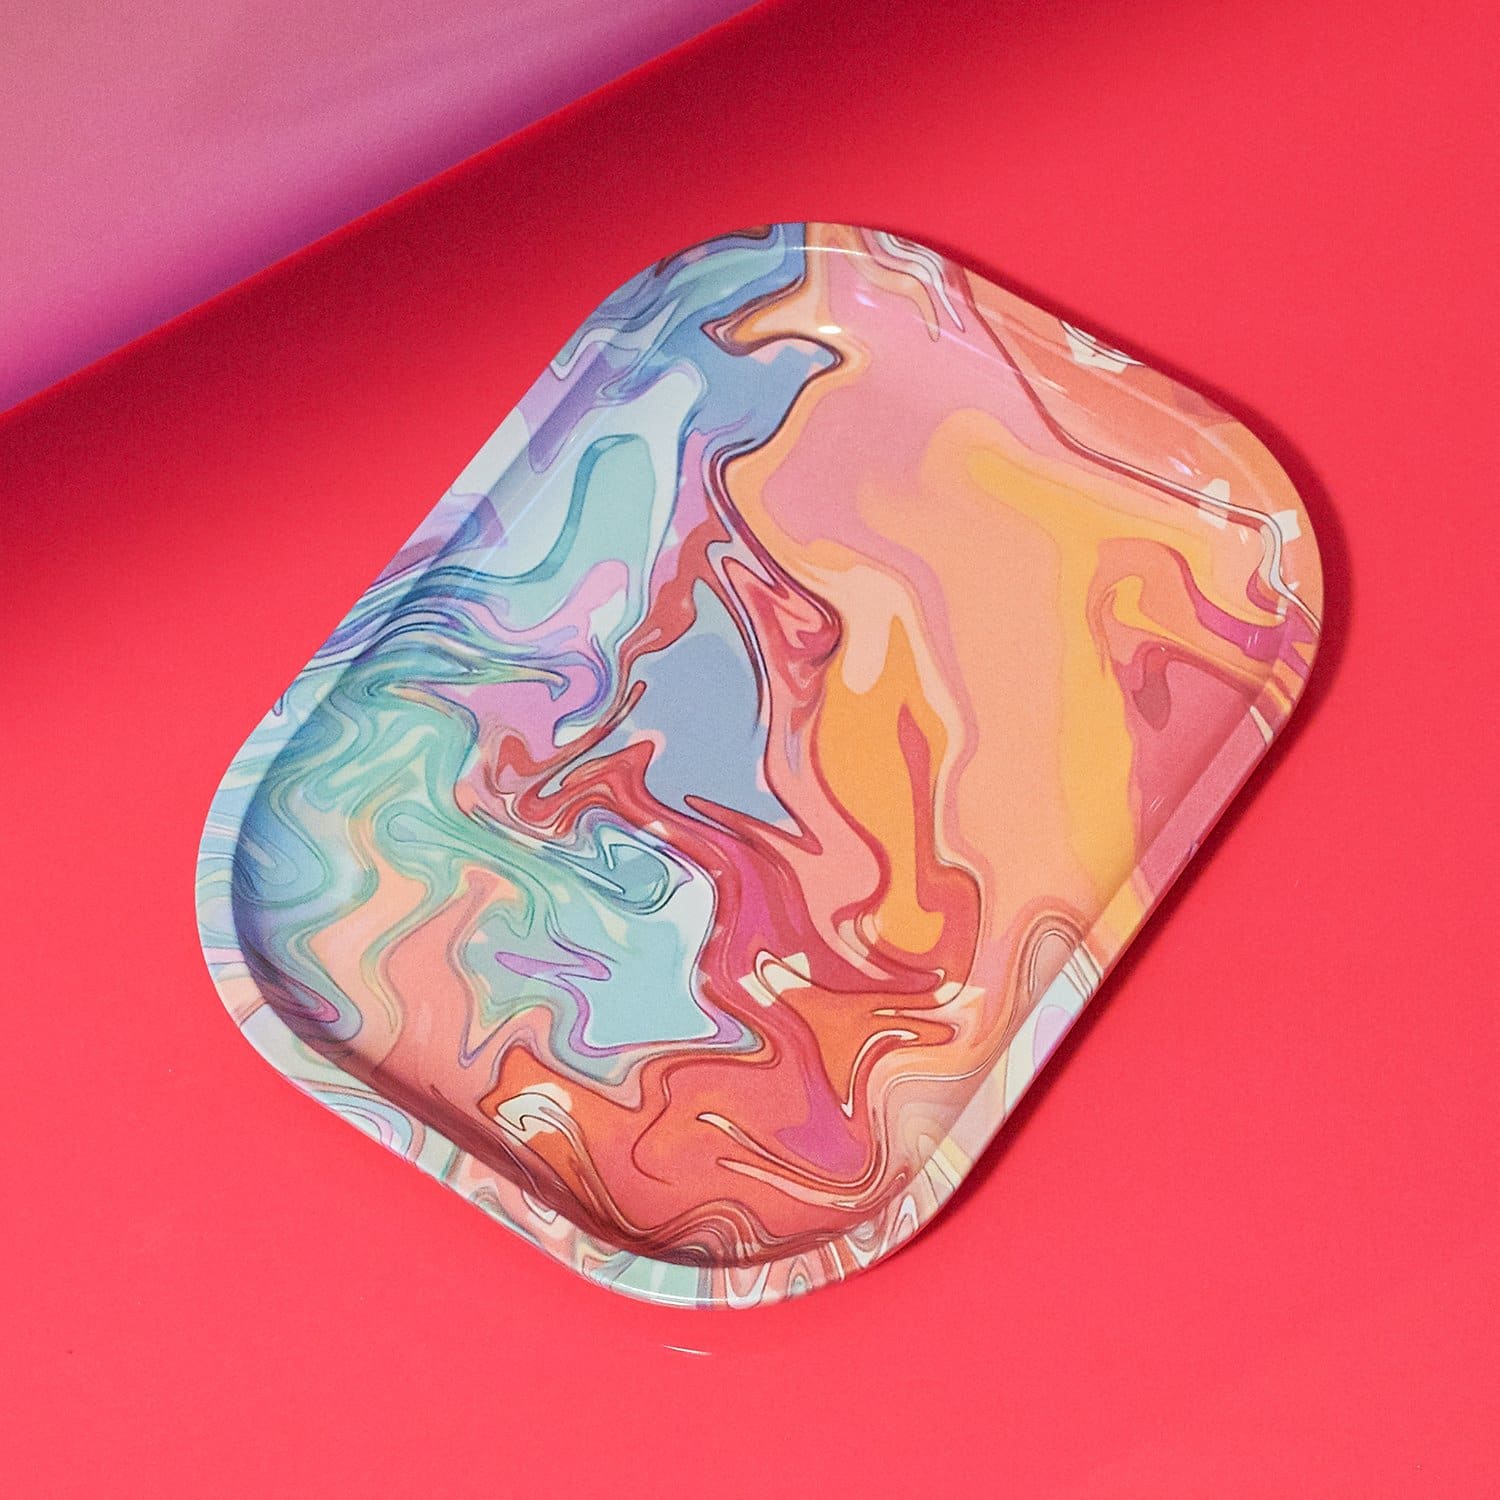 Mini Marble Swirl Tray Canna Style - Cannastyle - Catchall -